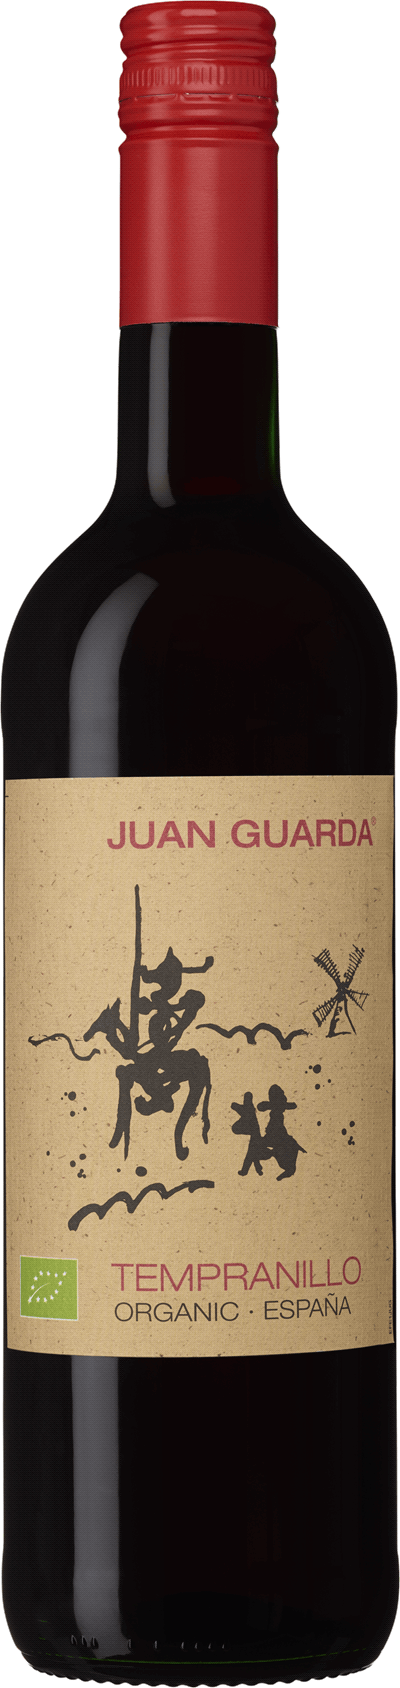 Juan Guarda Tempranillo 2019, 750 cl, 65 kr - Cocktailguiden | Rotweine